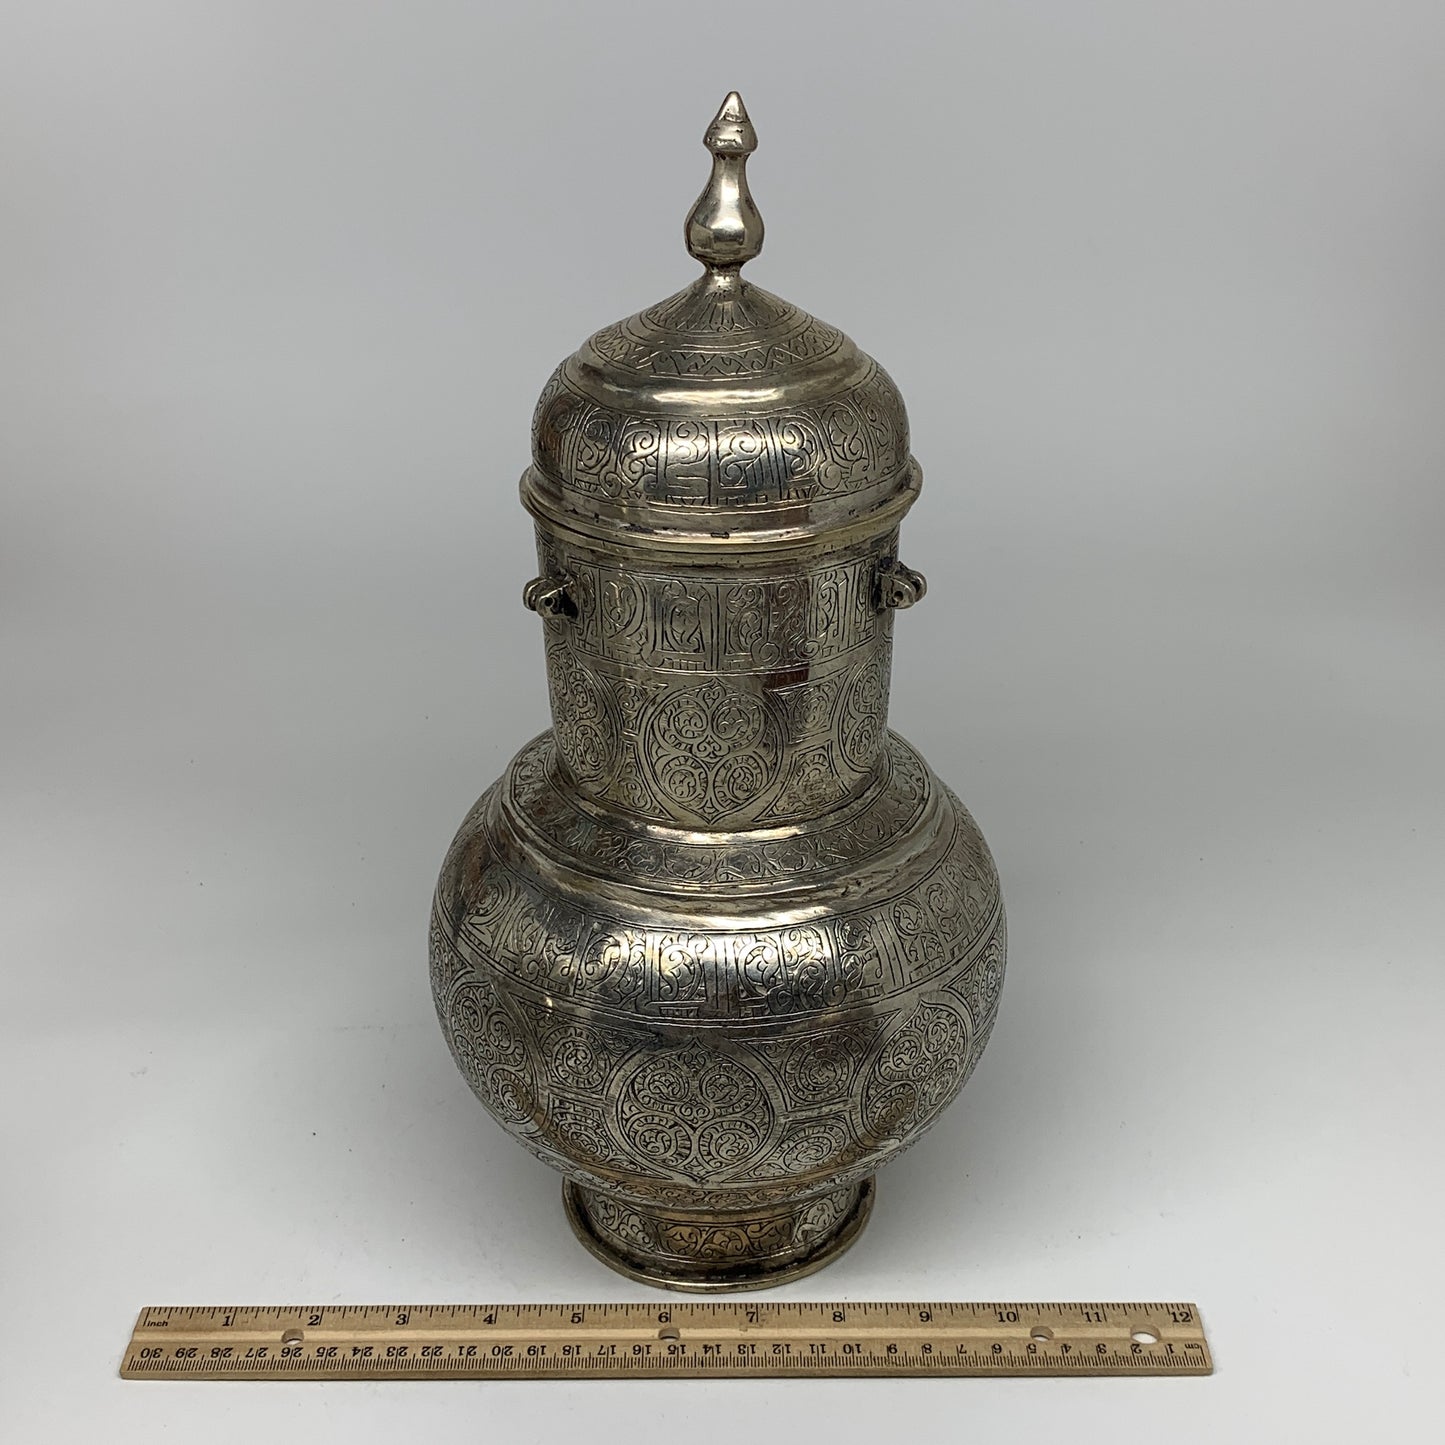 1192g,13.5"x7" Handmade Antique Pitcher Ewer Brass/Copper @Afghanistan, P153